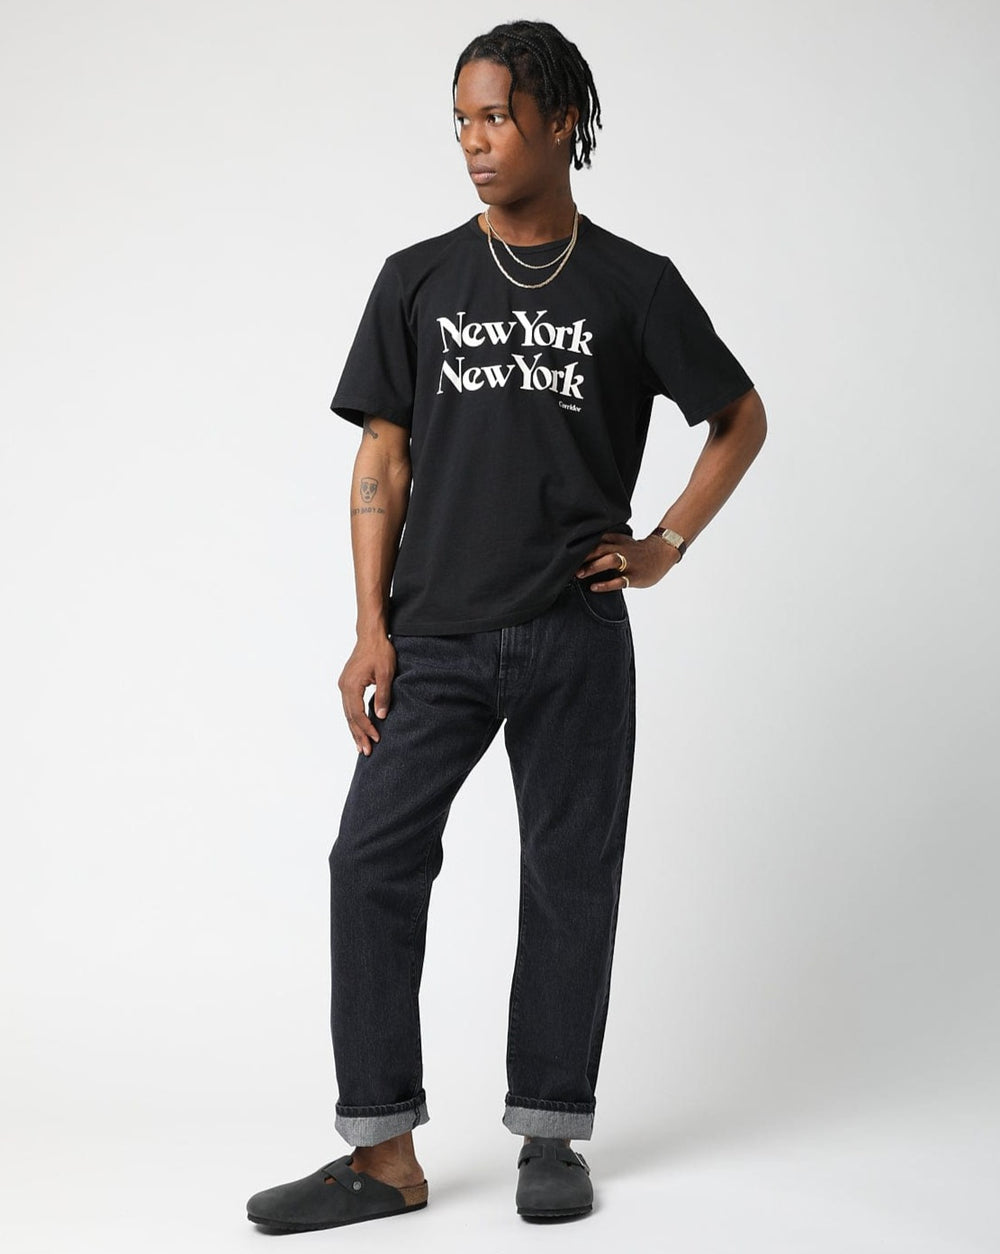 New York New York T-Shirt - Black-T-Shirt-Corridor-Corridor